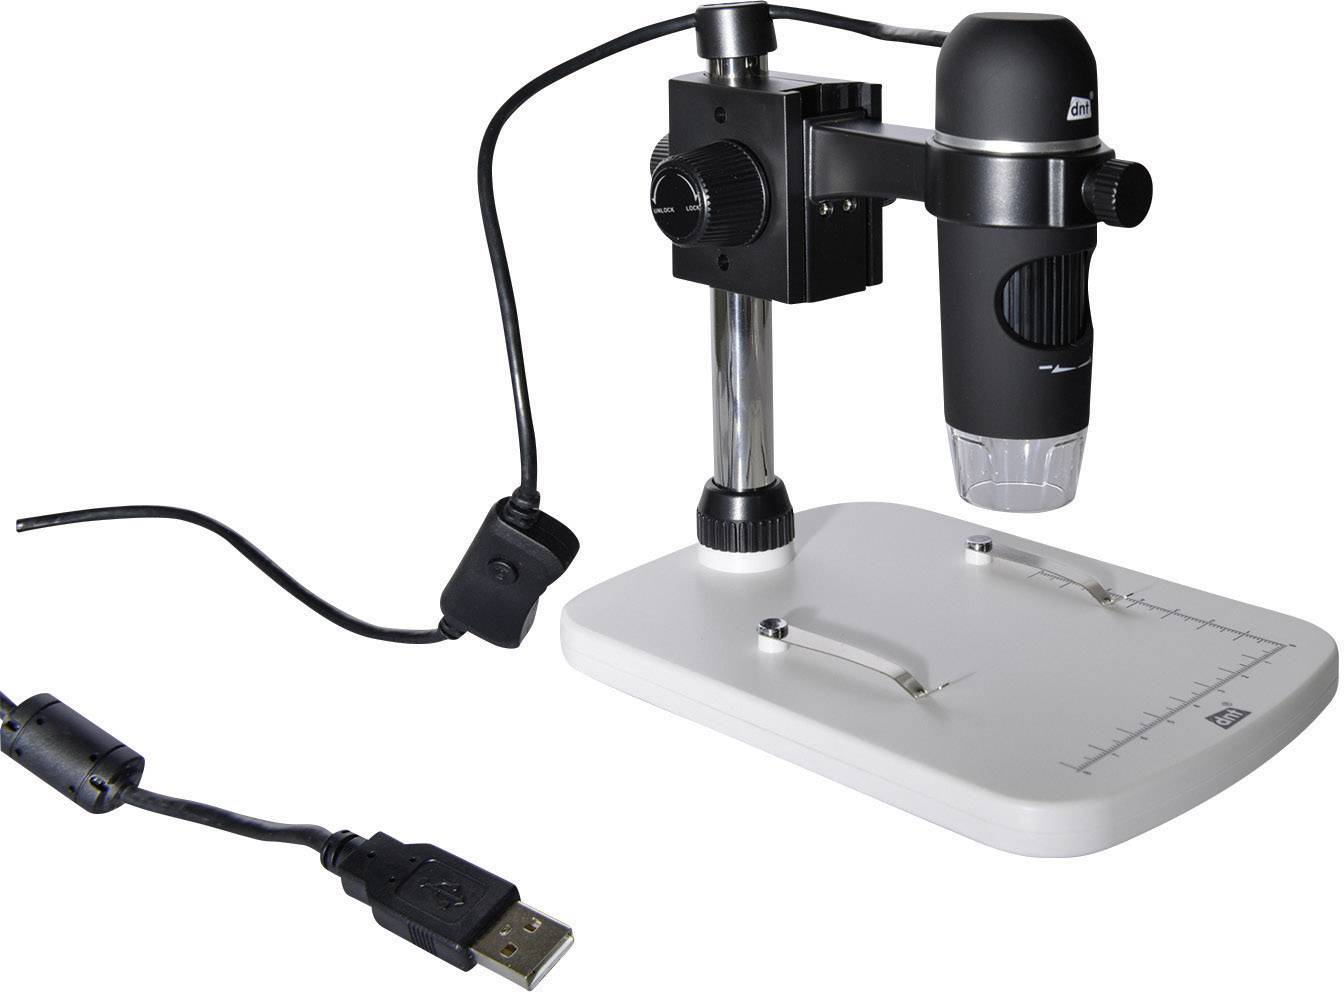 Usb microscope camera driver windows 10